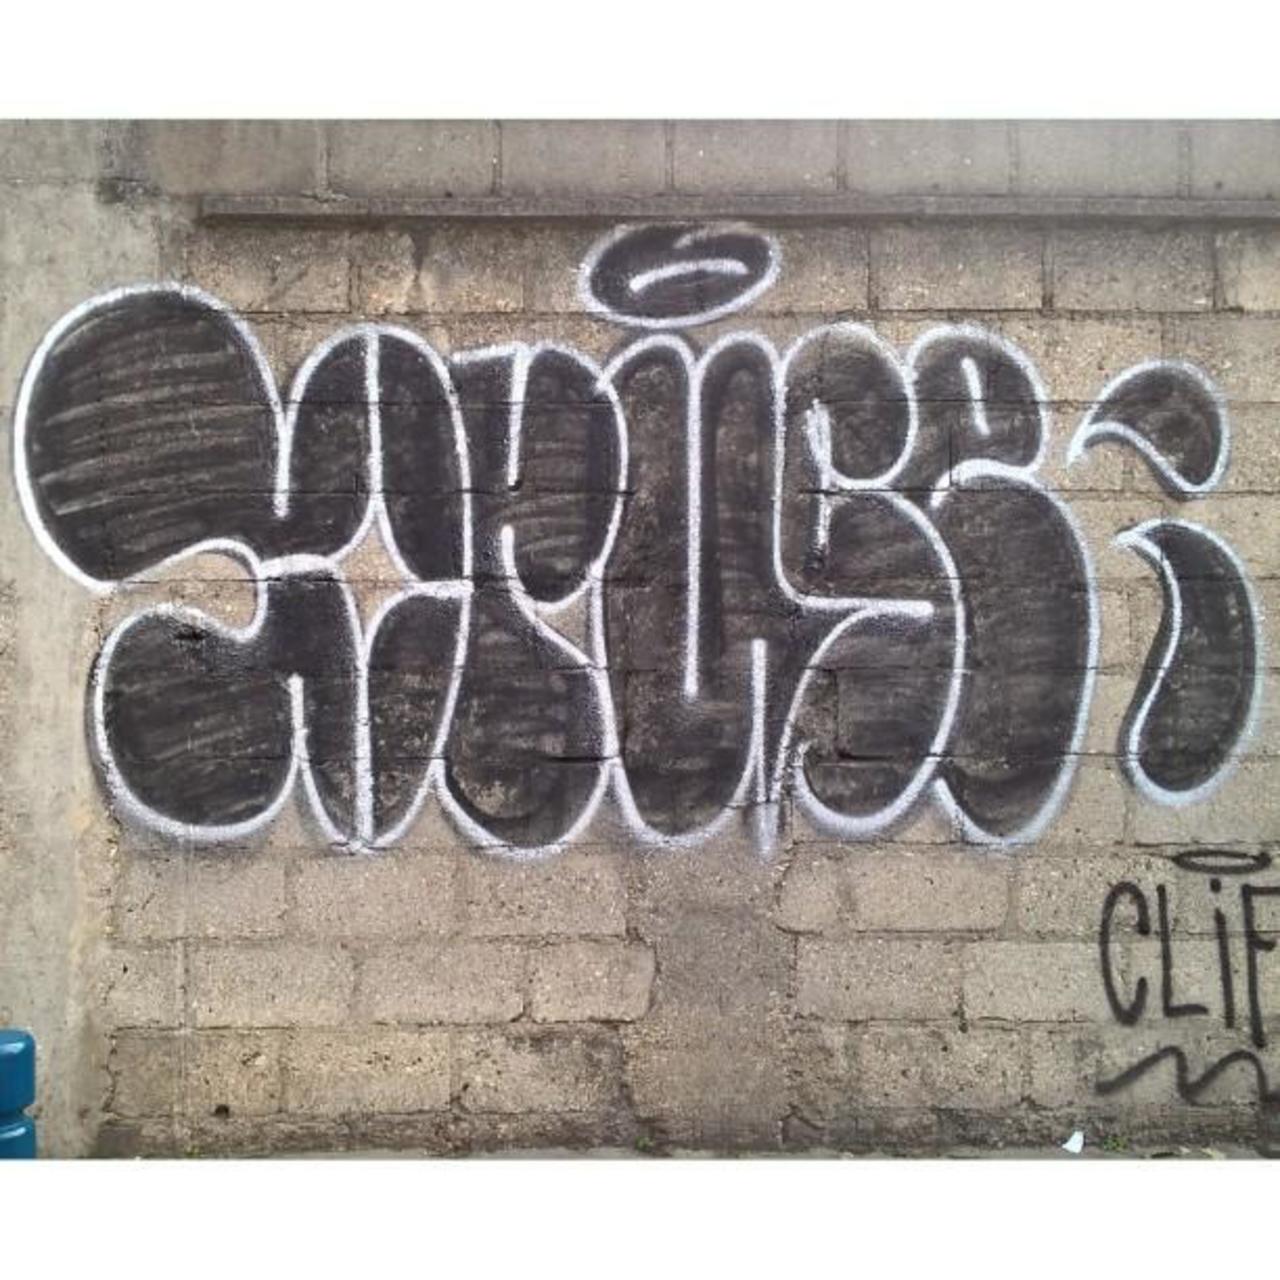 BRUCE
#CoolCrew #streetart #graffiti #graff #art #fatcap #bombing #sprayart #spraycanart #wallart #handstyle #lette… http://t.co/i36zmm89Pf